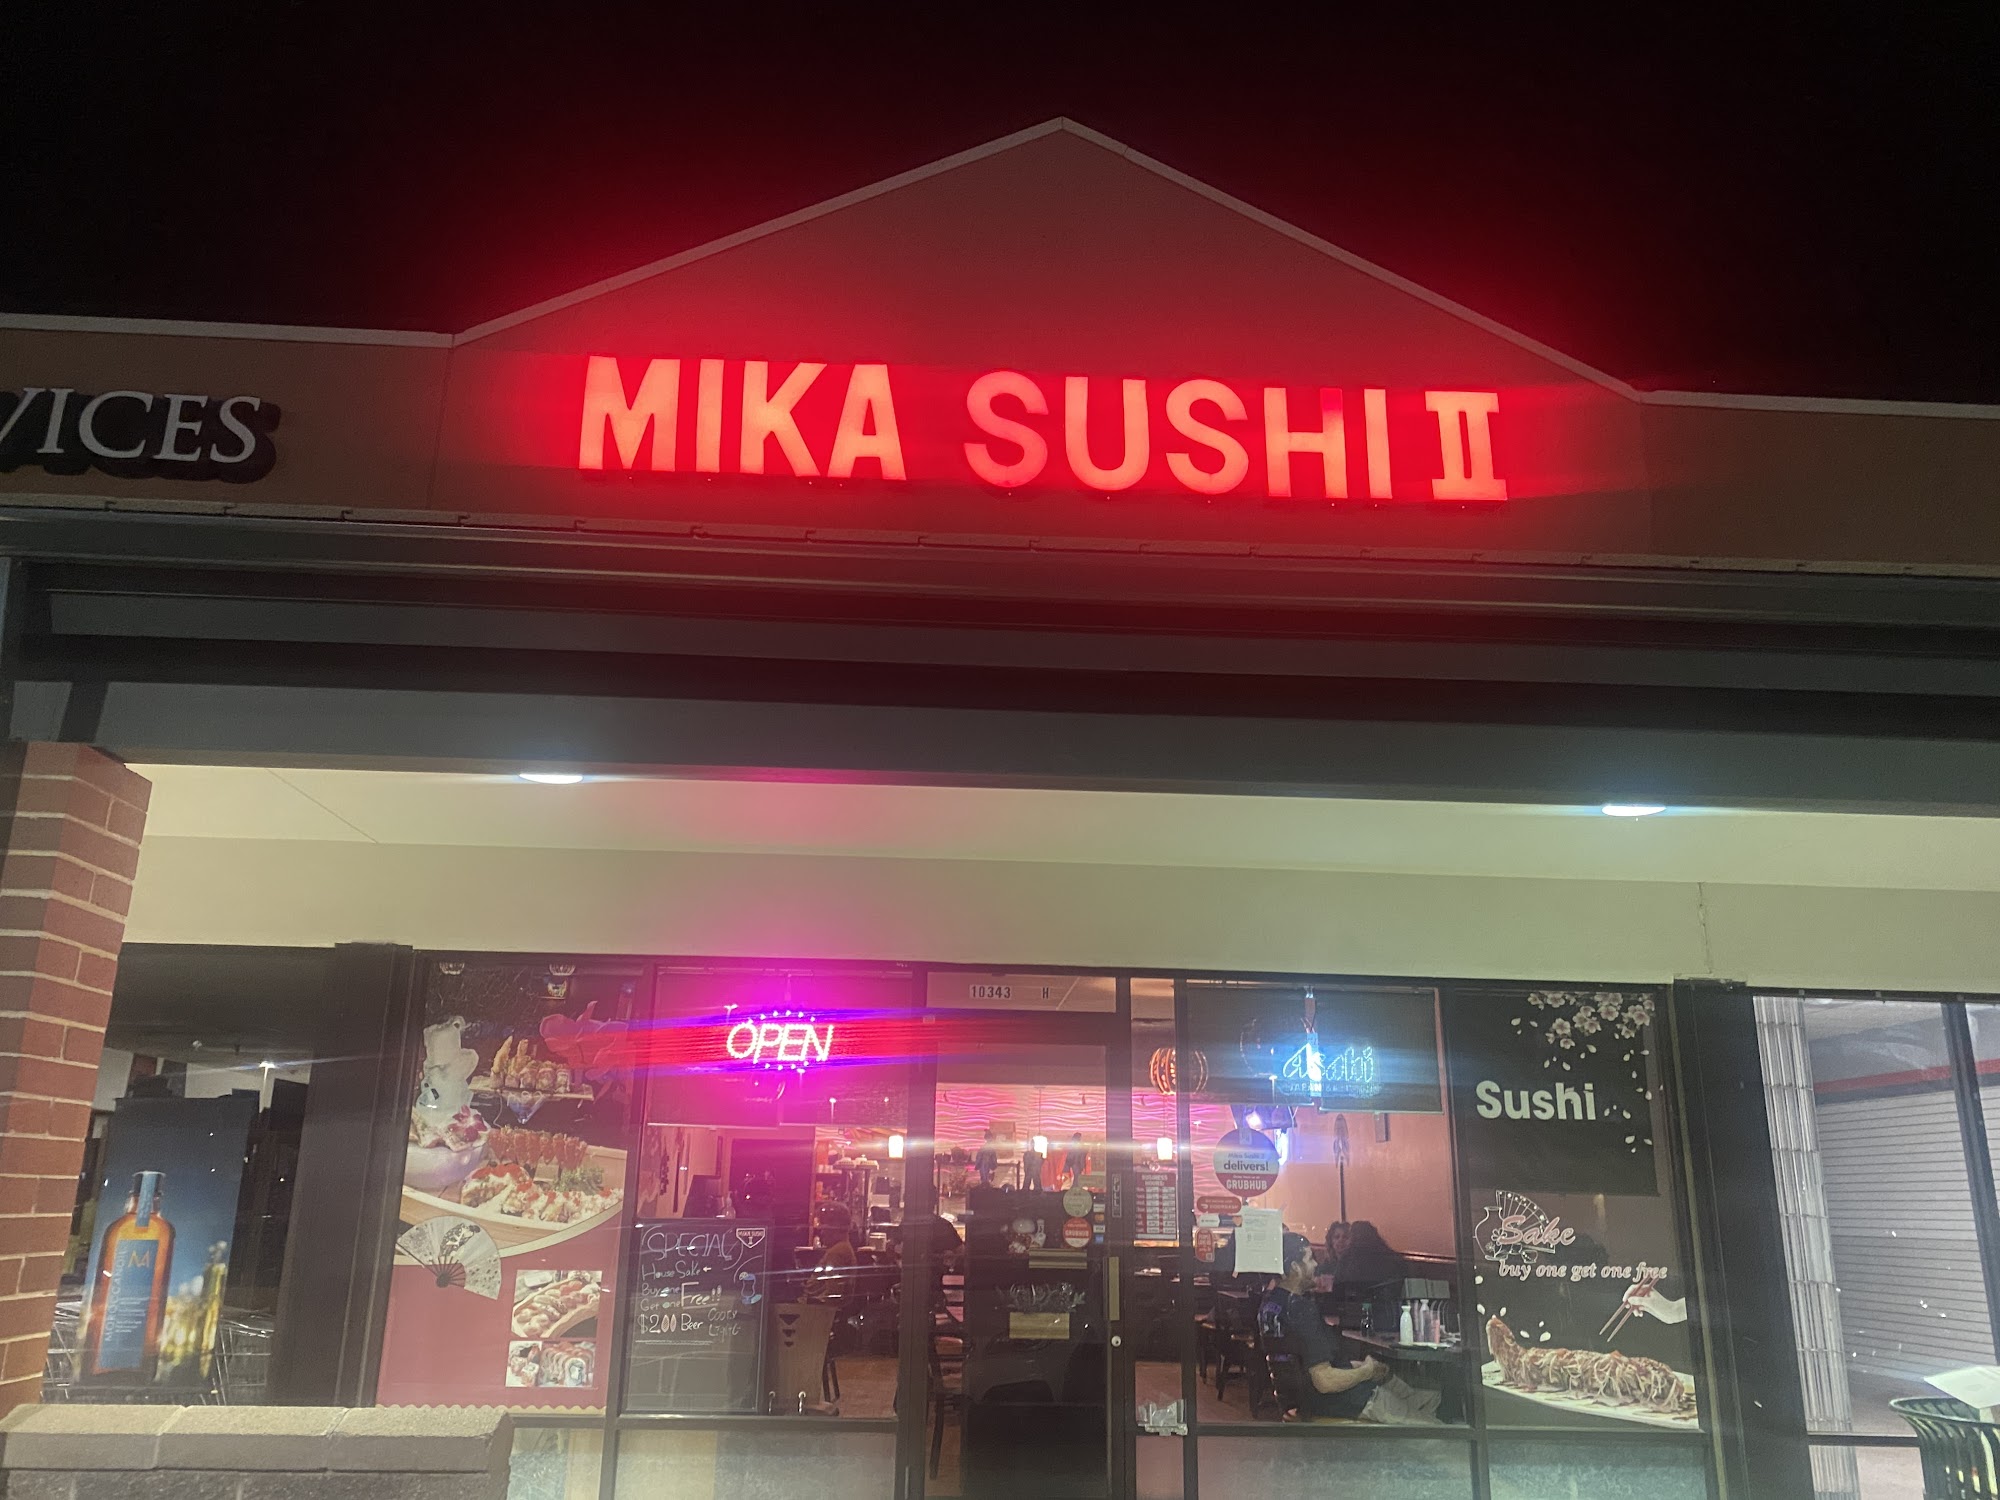 Mika Sushi II